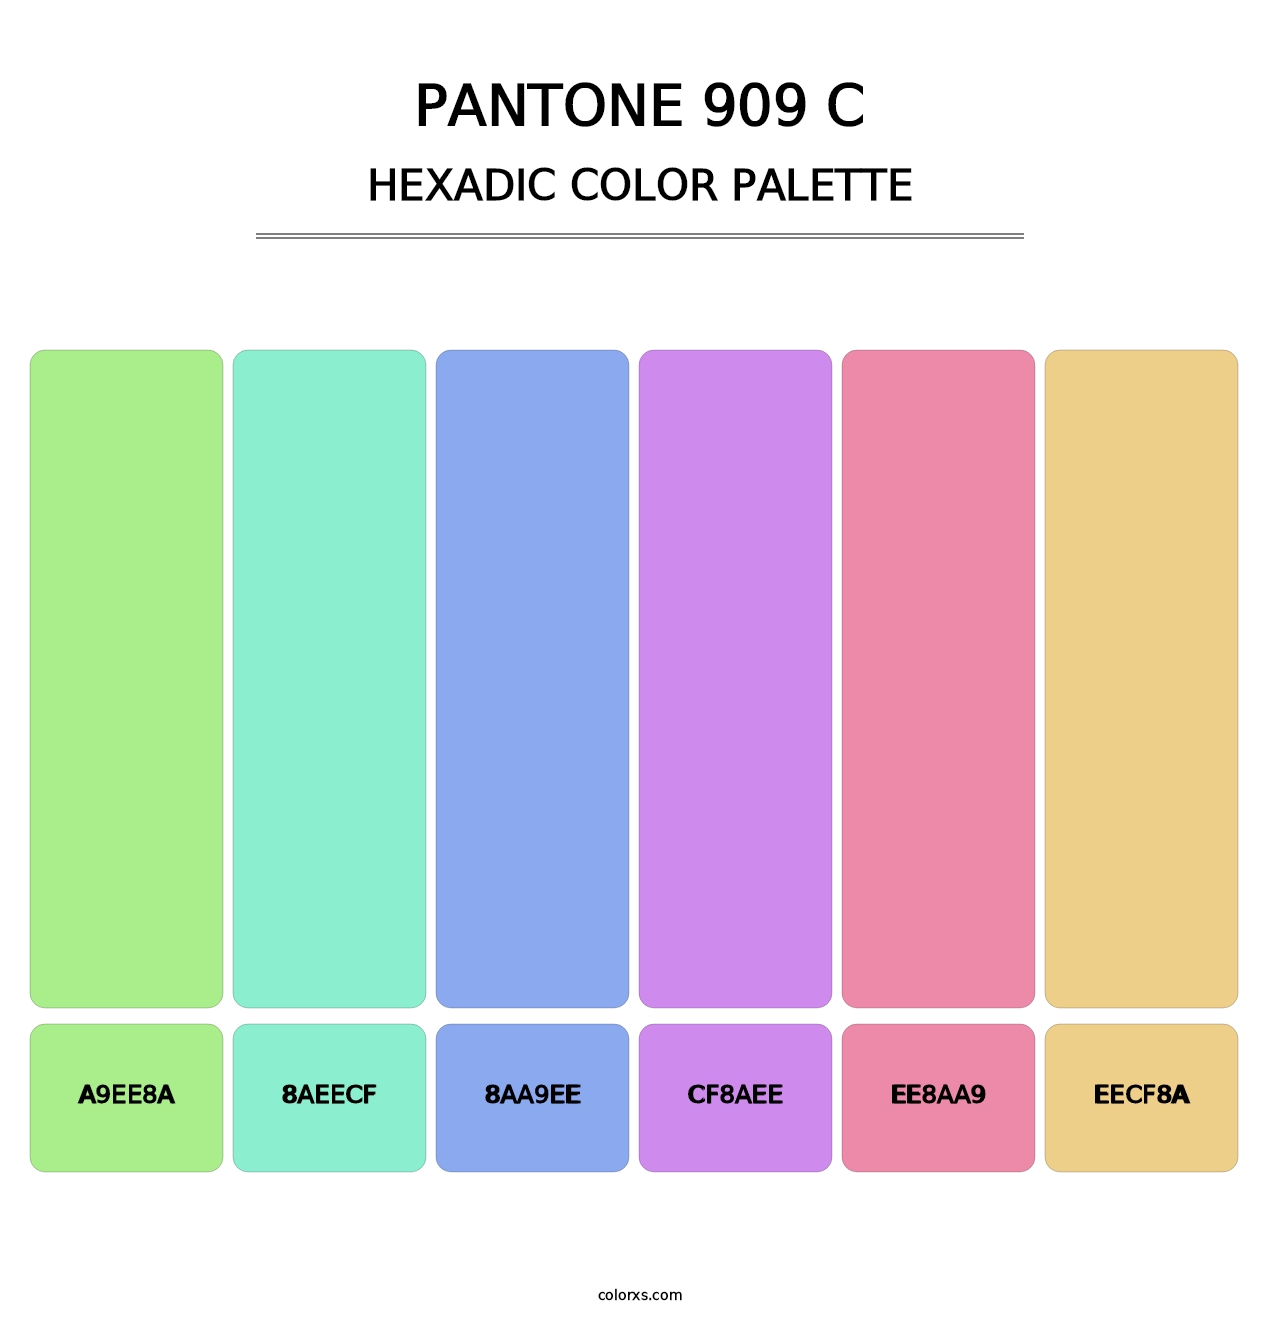 PANTONE 909 C - Hexadic Color Palette